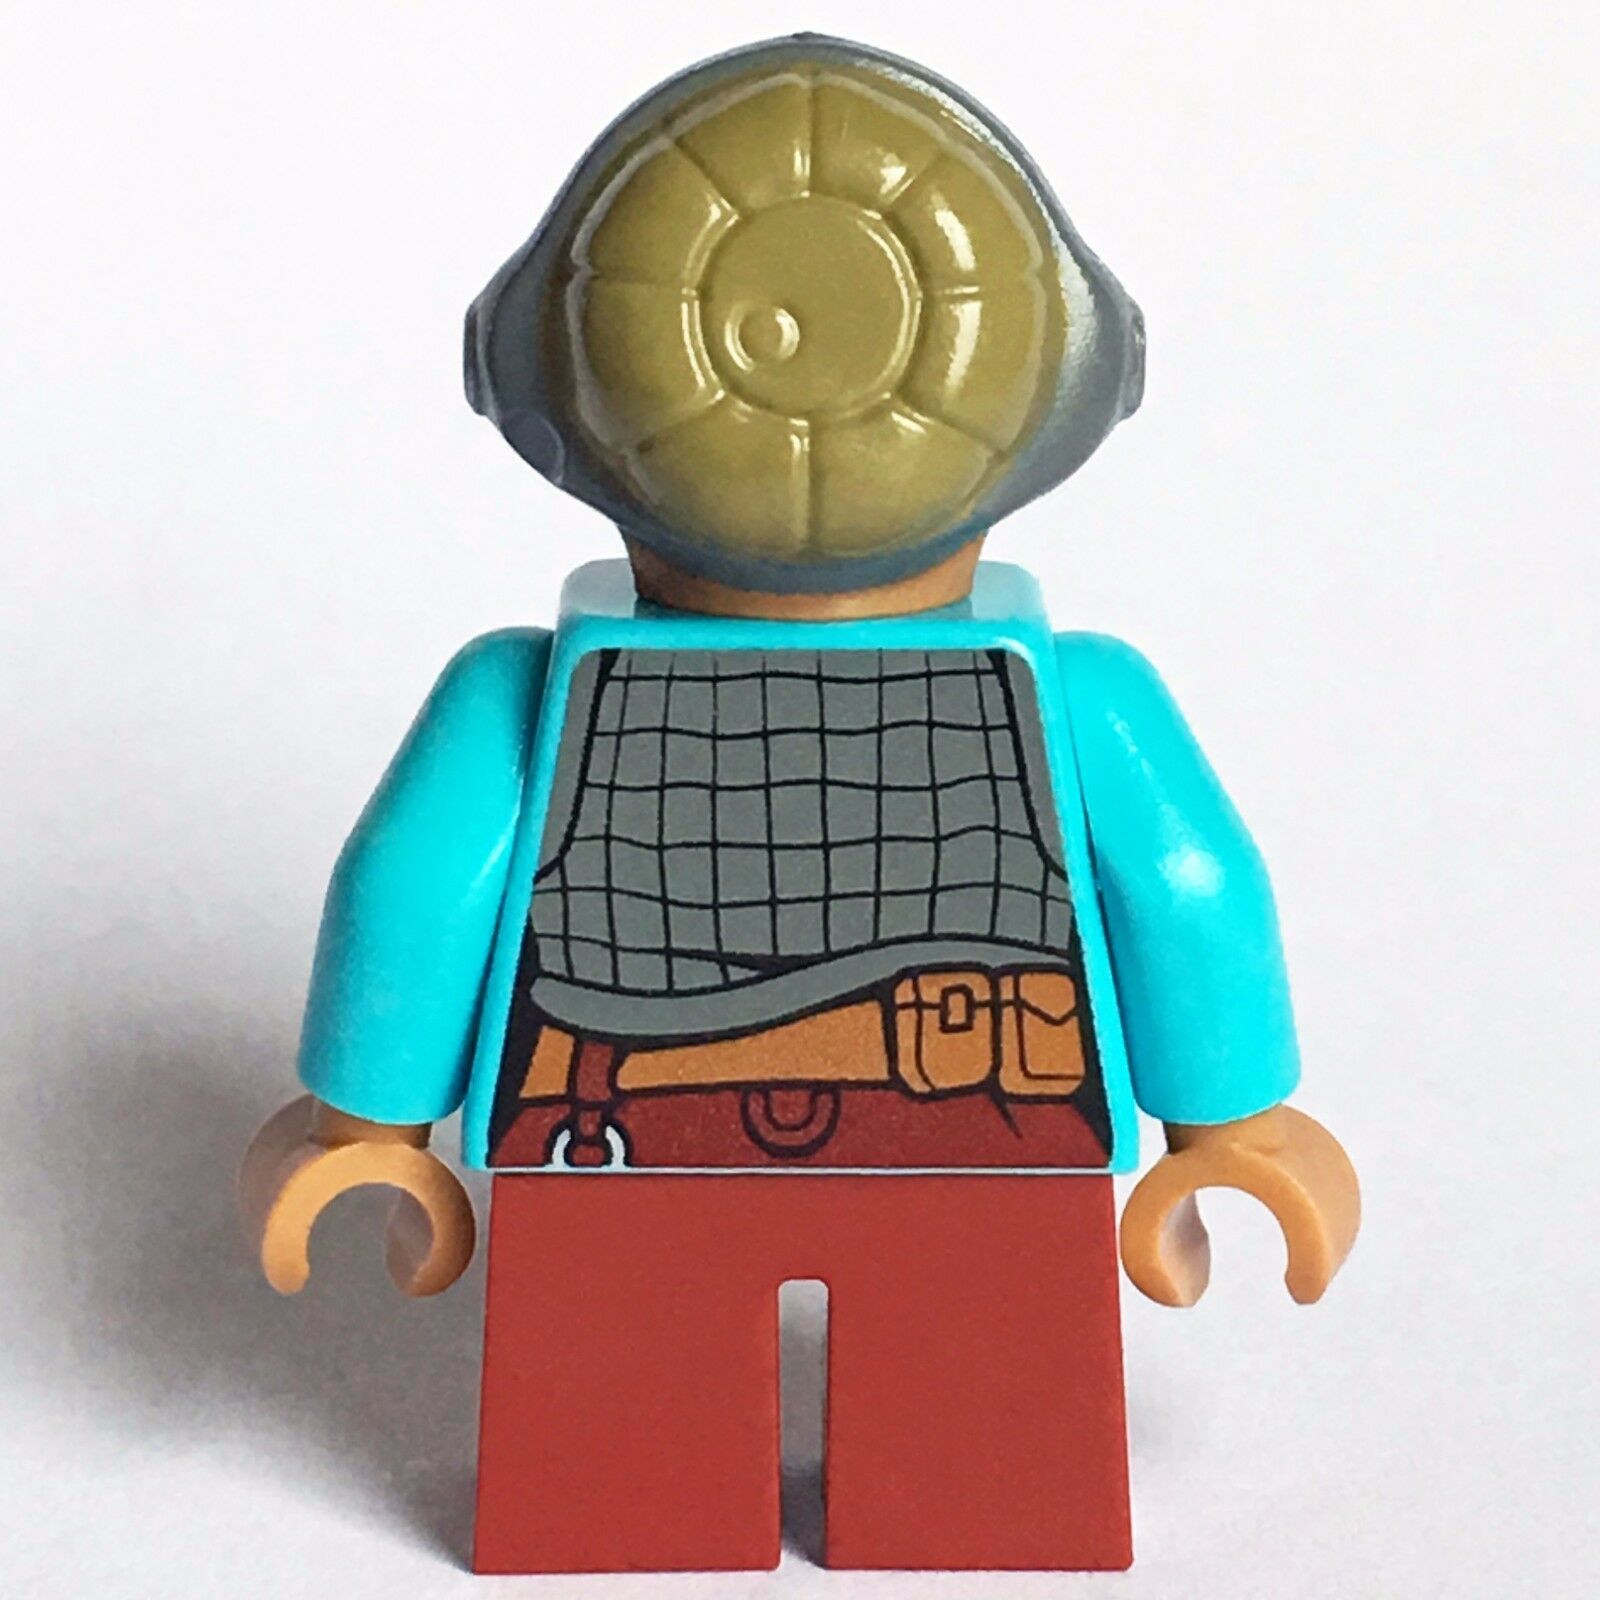 New Star Wars LEGO Maz Kanata Takodana Outfit Force Awakens Minifigure 75139 - Bricks & Figures